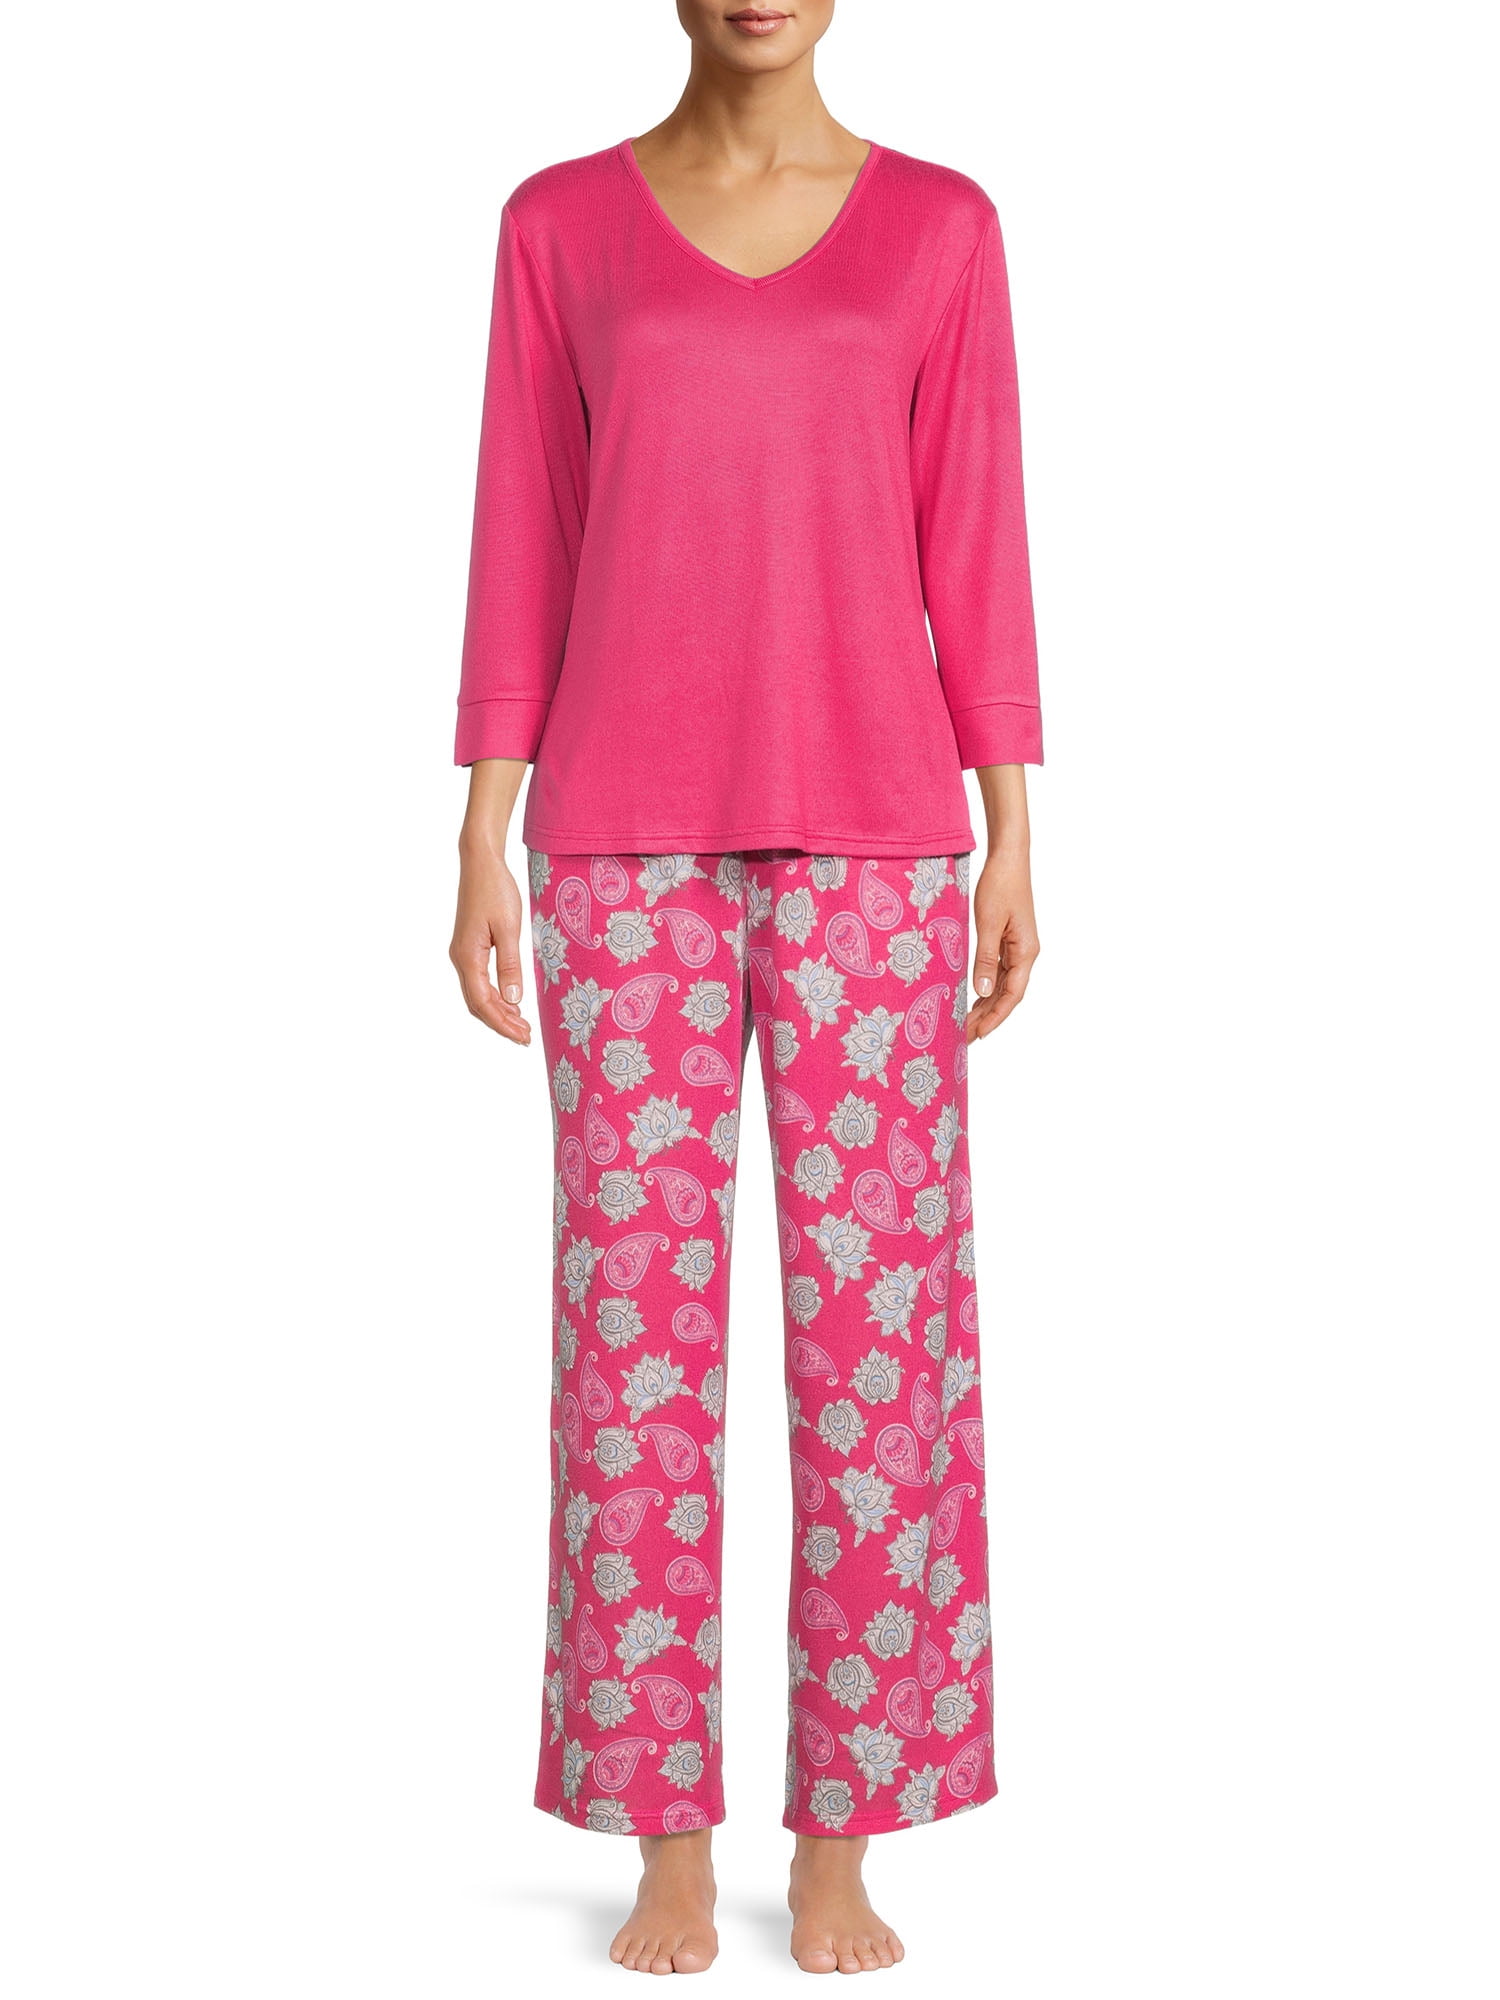 Hanes Women's V-Neck Top and Pants Pajama Set, 2-Piece 